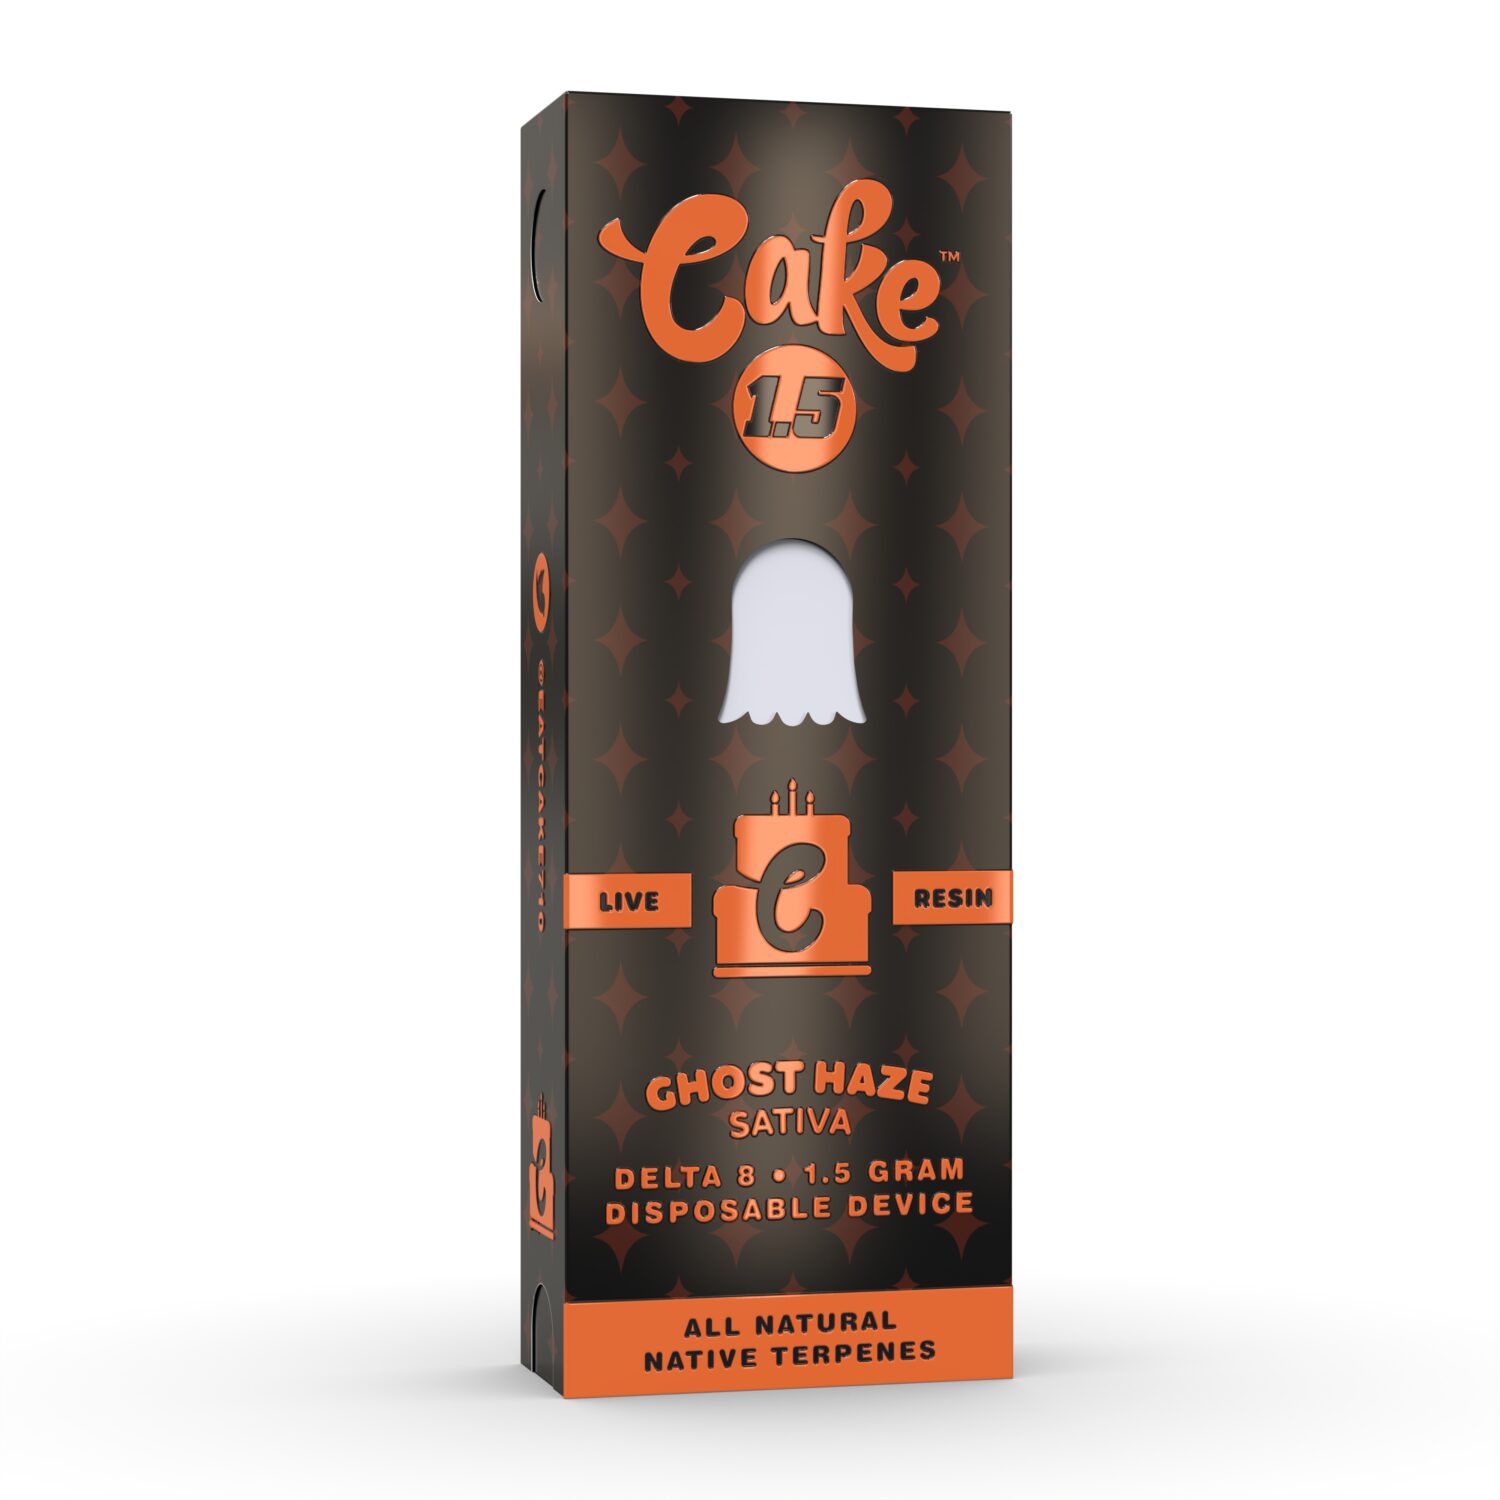 Cake-Delta-8-Live-Resin-Disposable-1.5g-Ghost-Haze-1-scaled-1.jpg